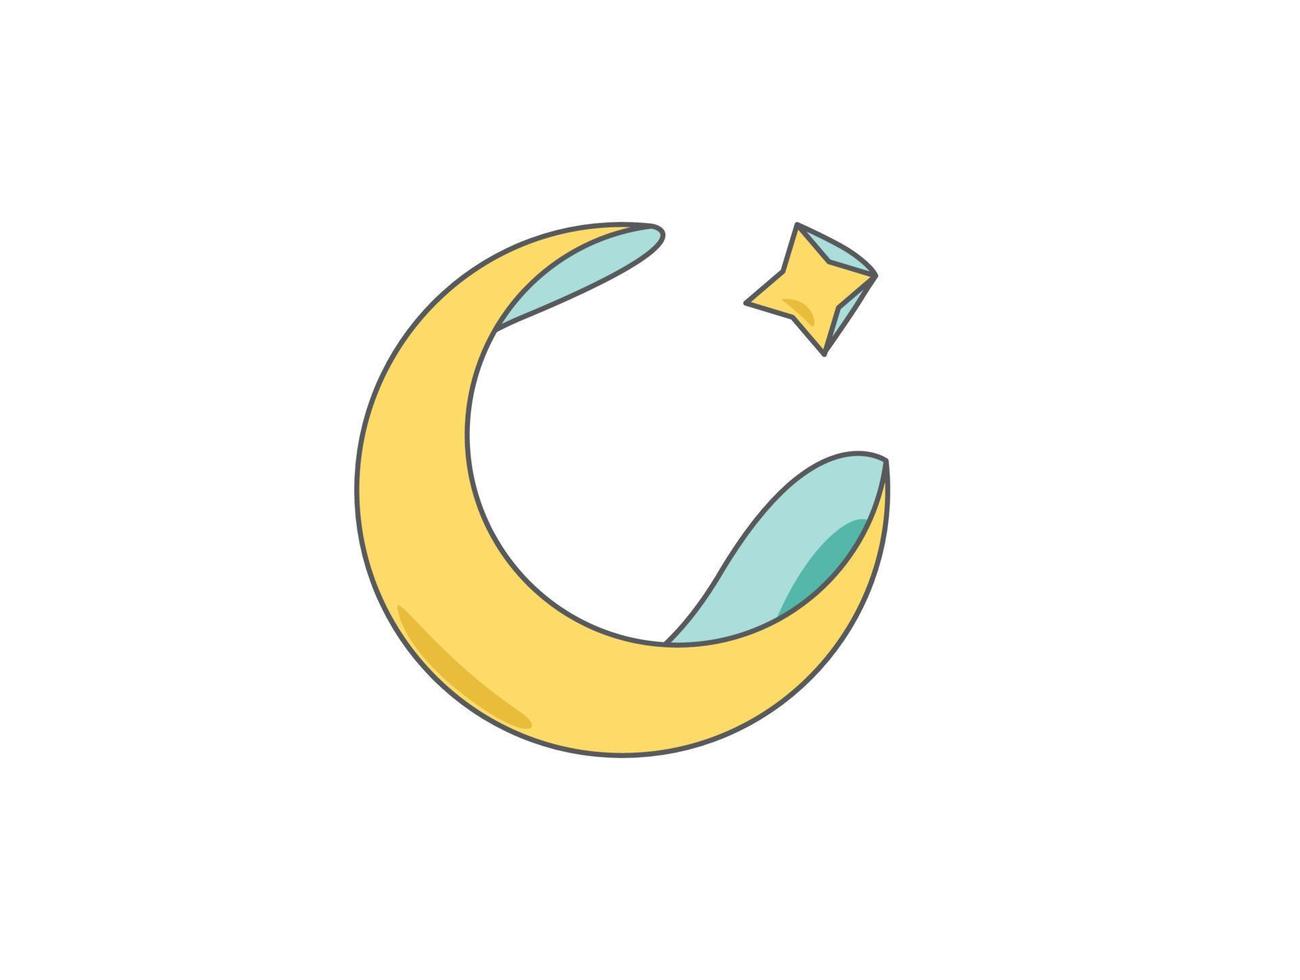 elementi di design a falce di luna e stelle. islamico musulmano vettore